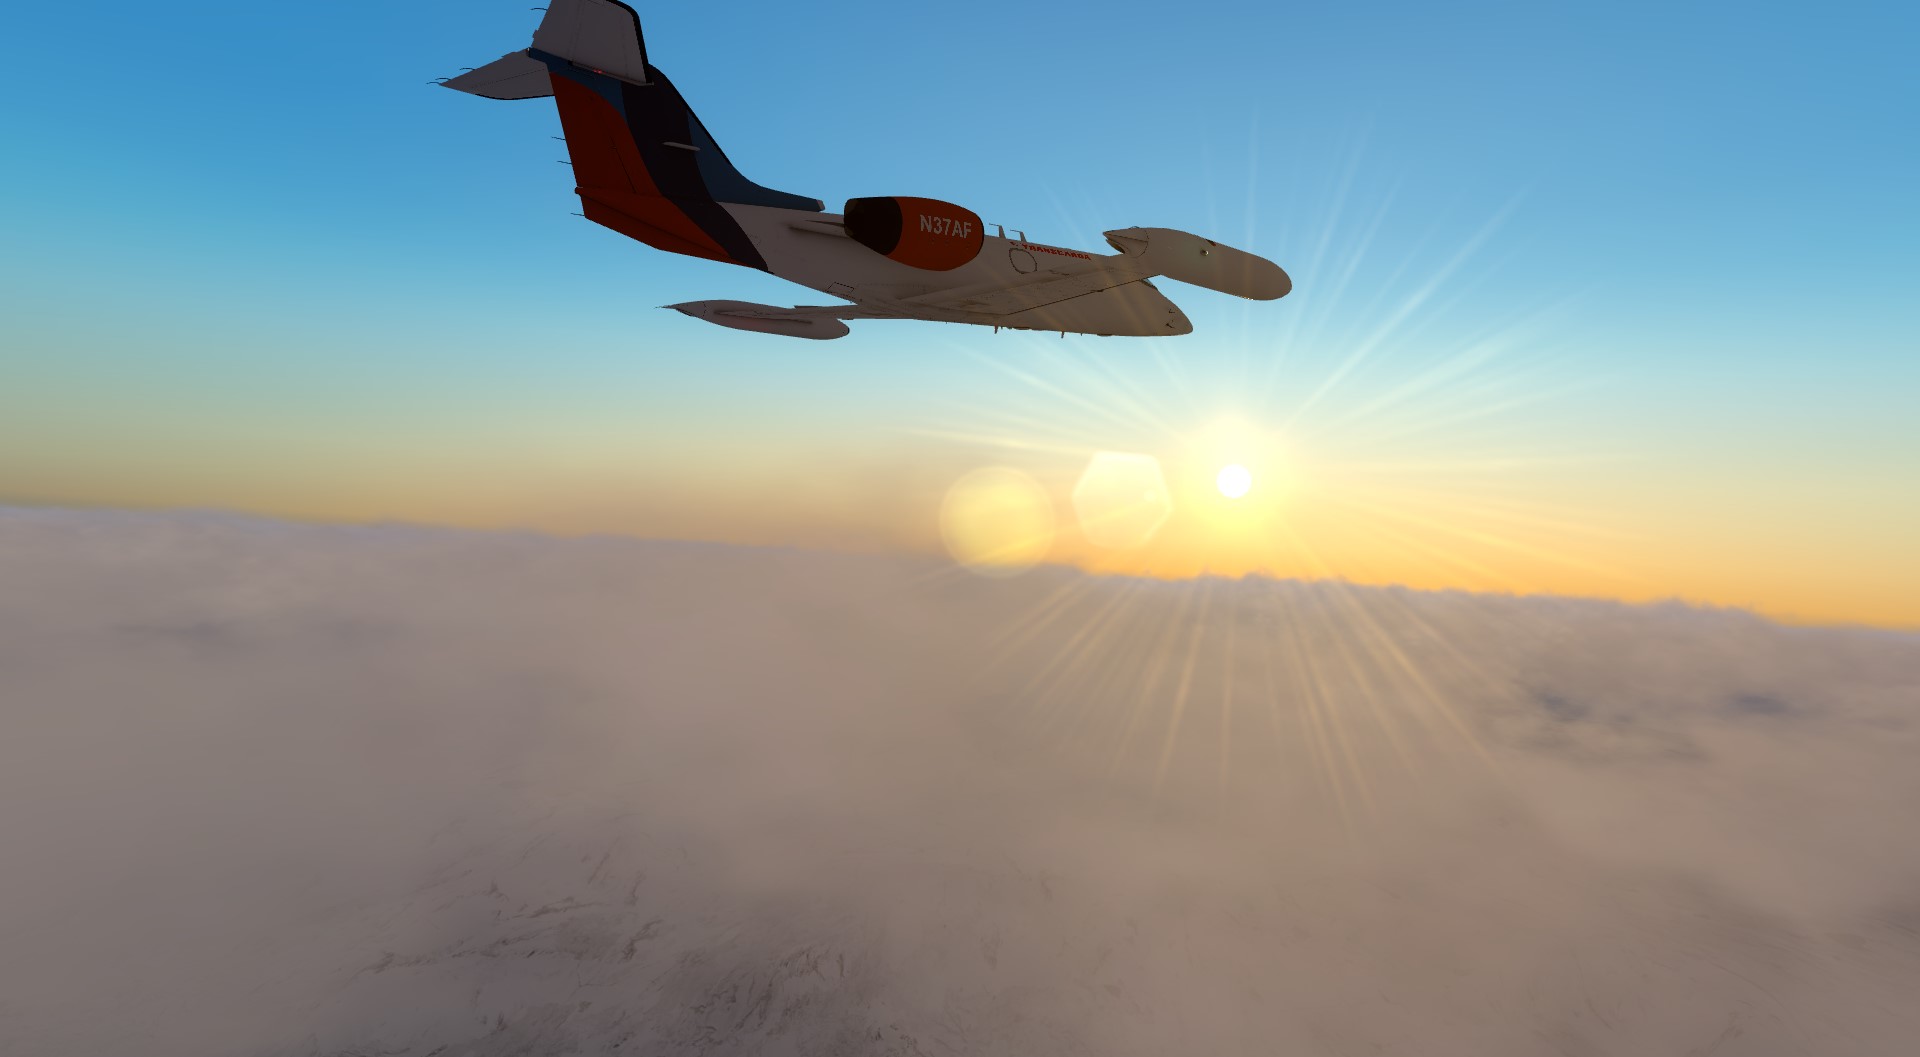 Flysimware – Learjet 35A 评测与冰岛送货之旅-6736 